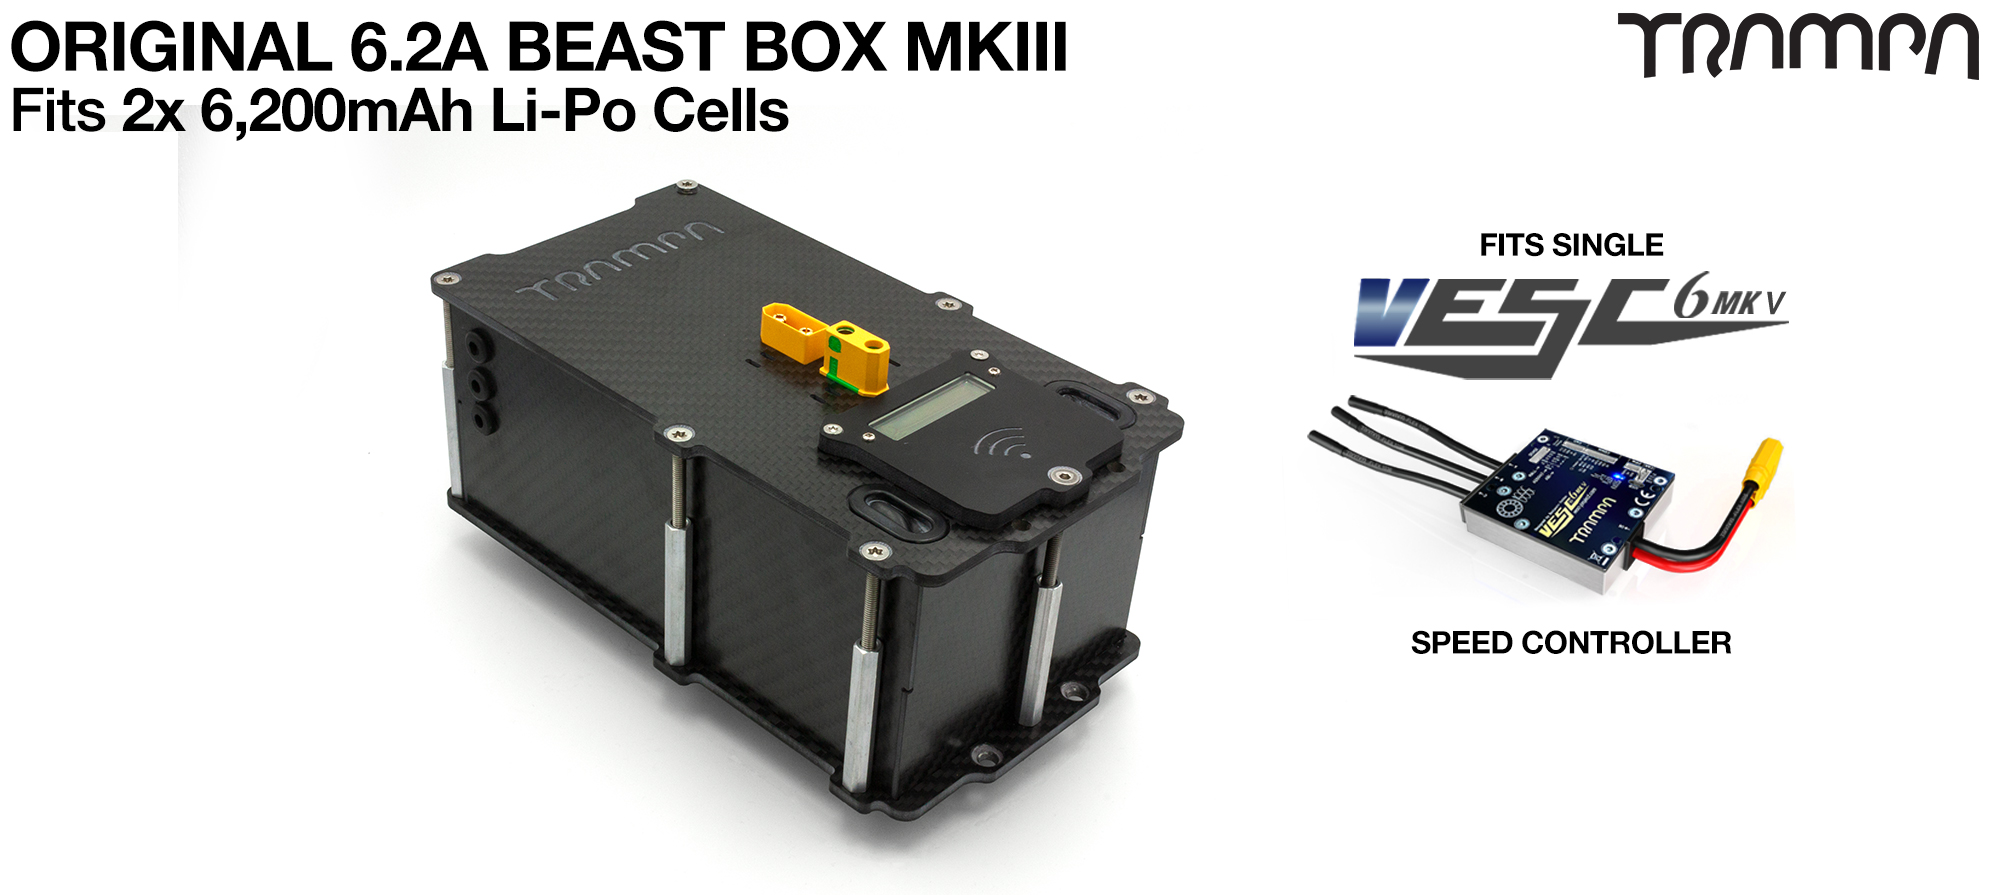 Original 6.2Ah BEAST box with 1x VESC 6 